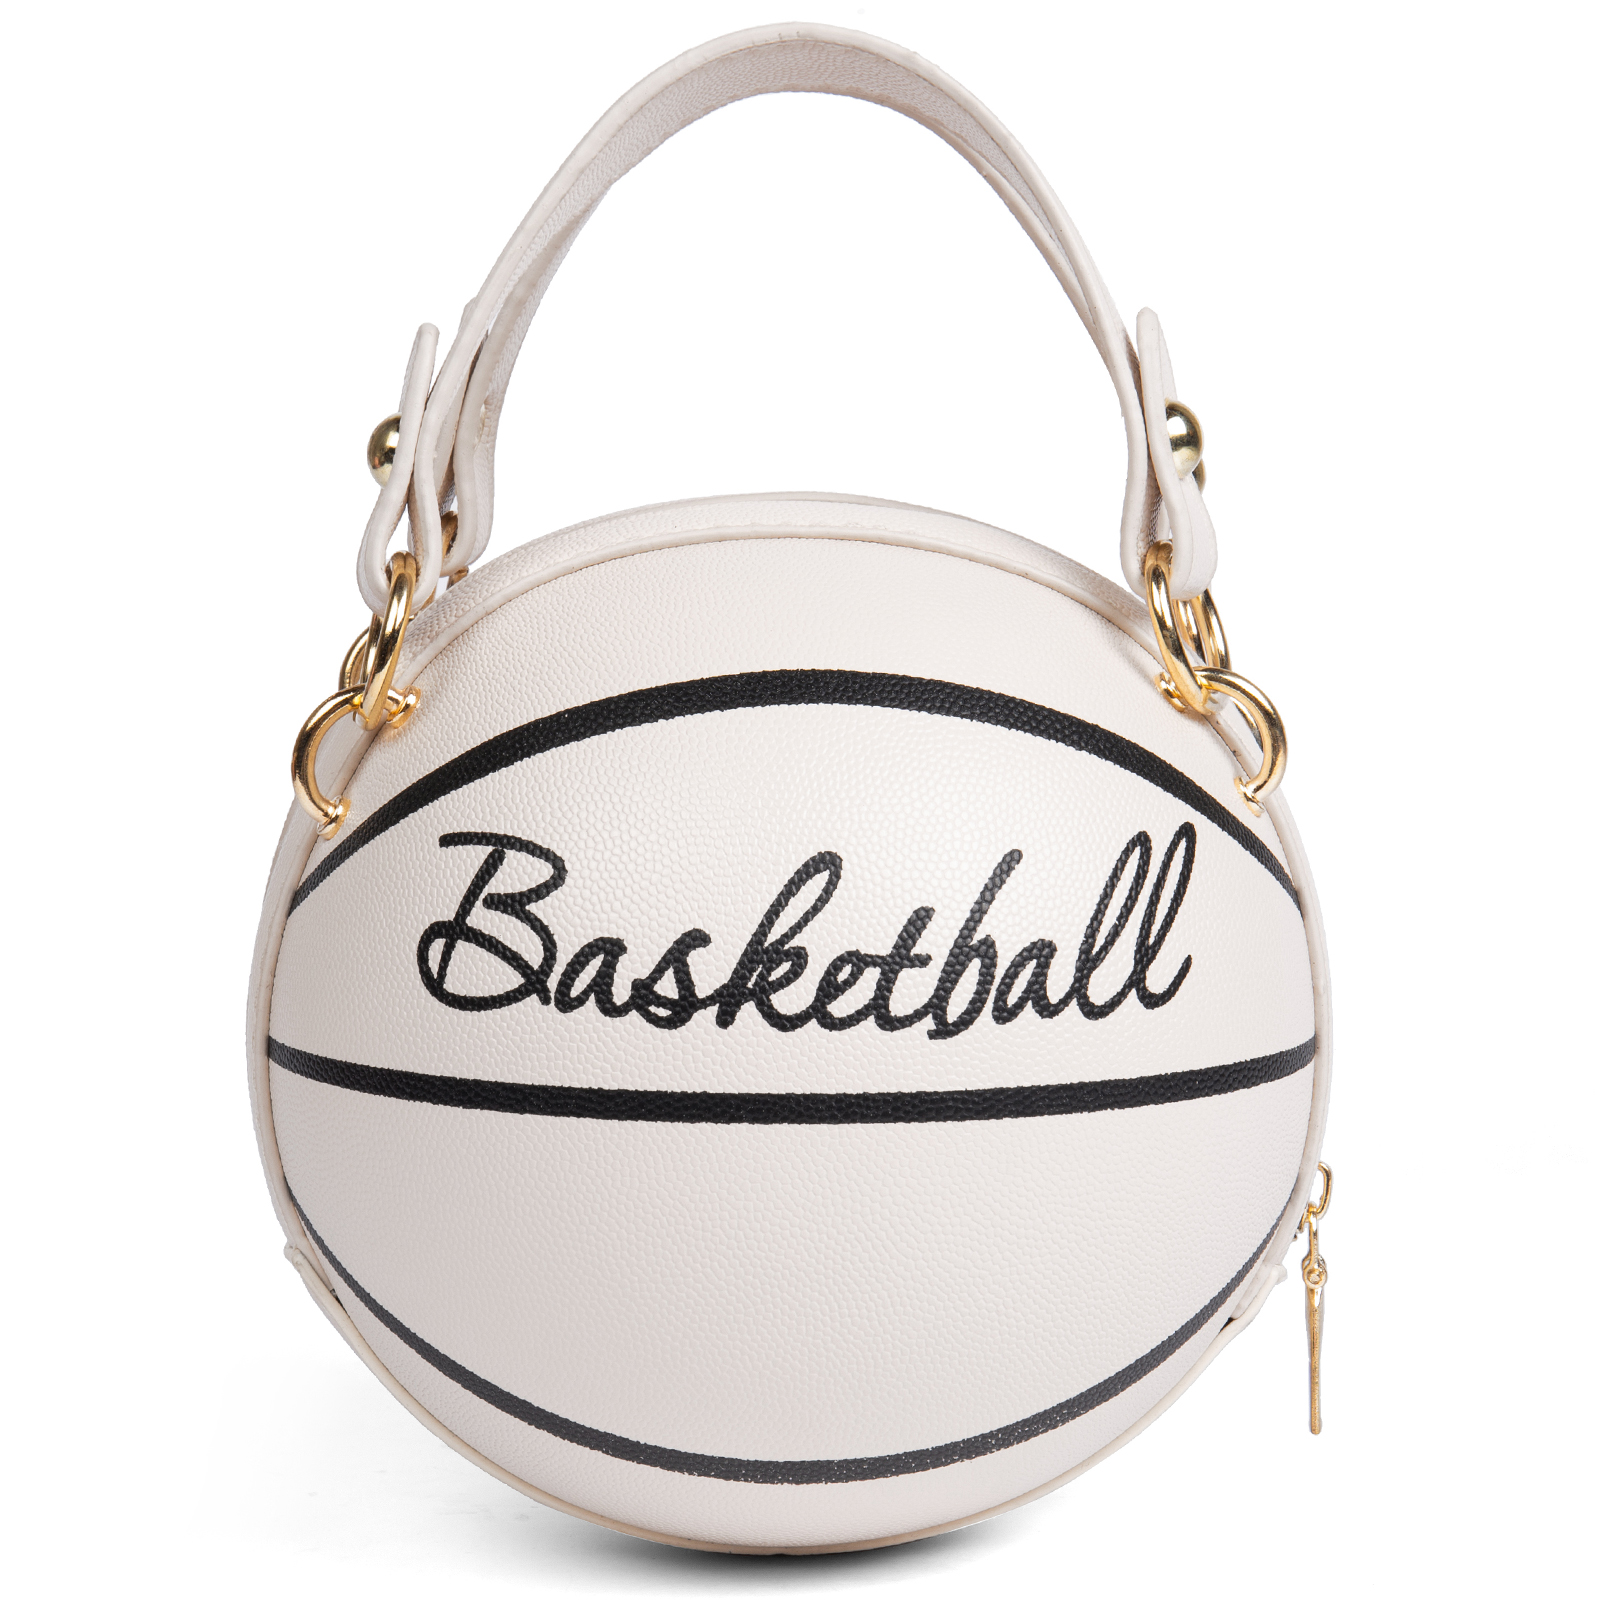 VALICLUD Basketball Shaped Purse Basketball Shaped Bag PU Leather Round  Handbag Shoulder BagsFashion…See more VALICLUD Basketball Shaped Purse